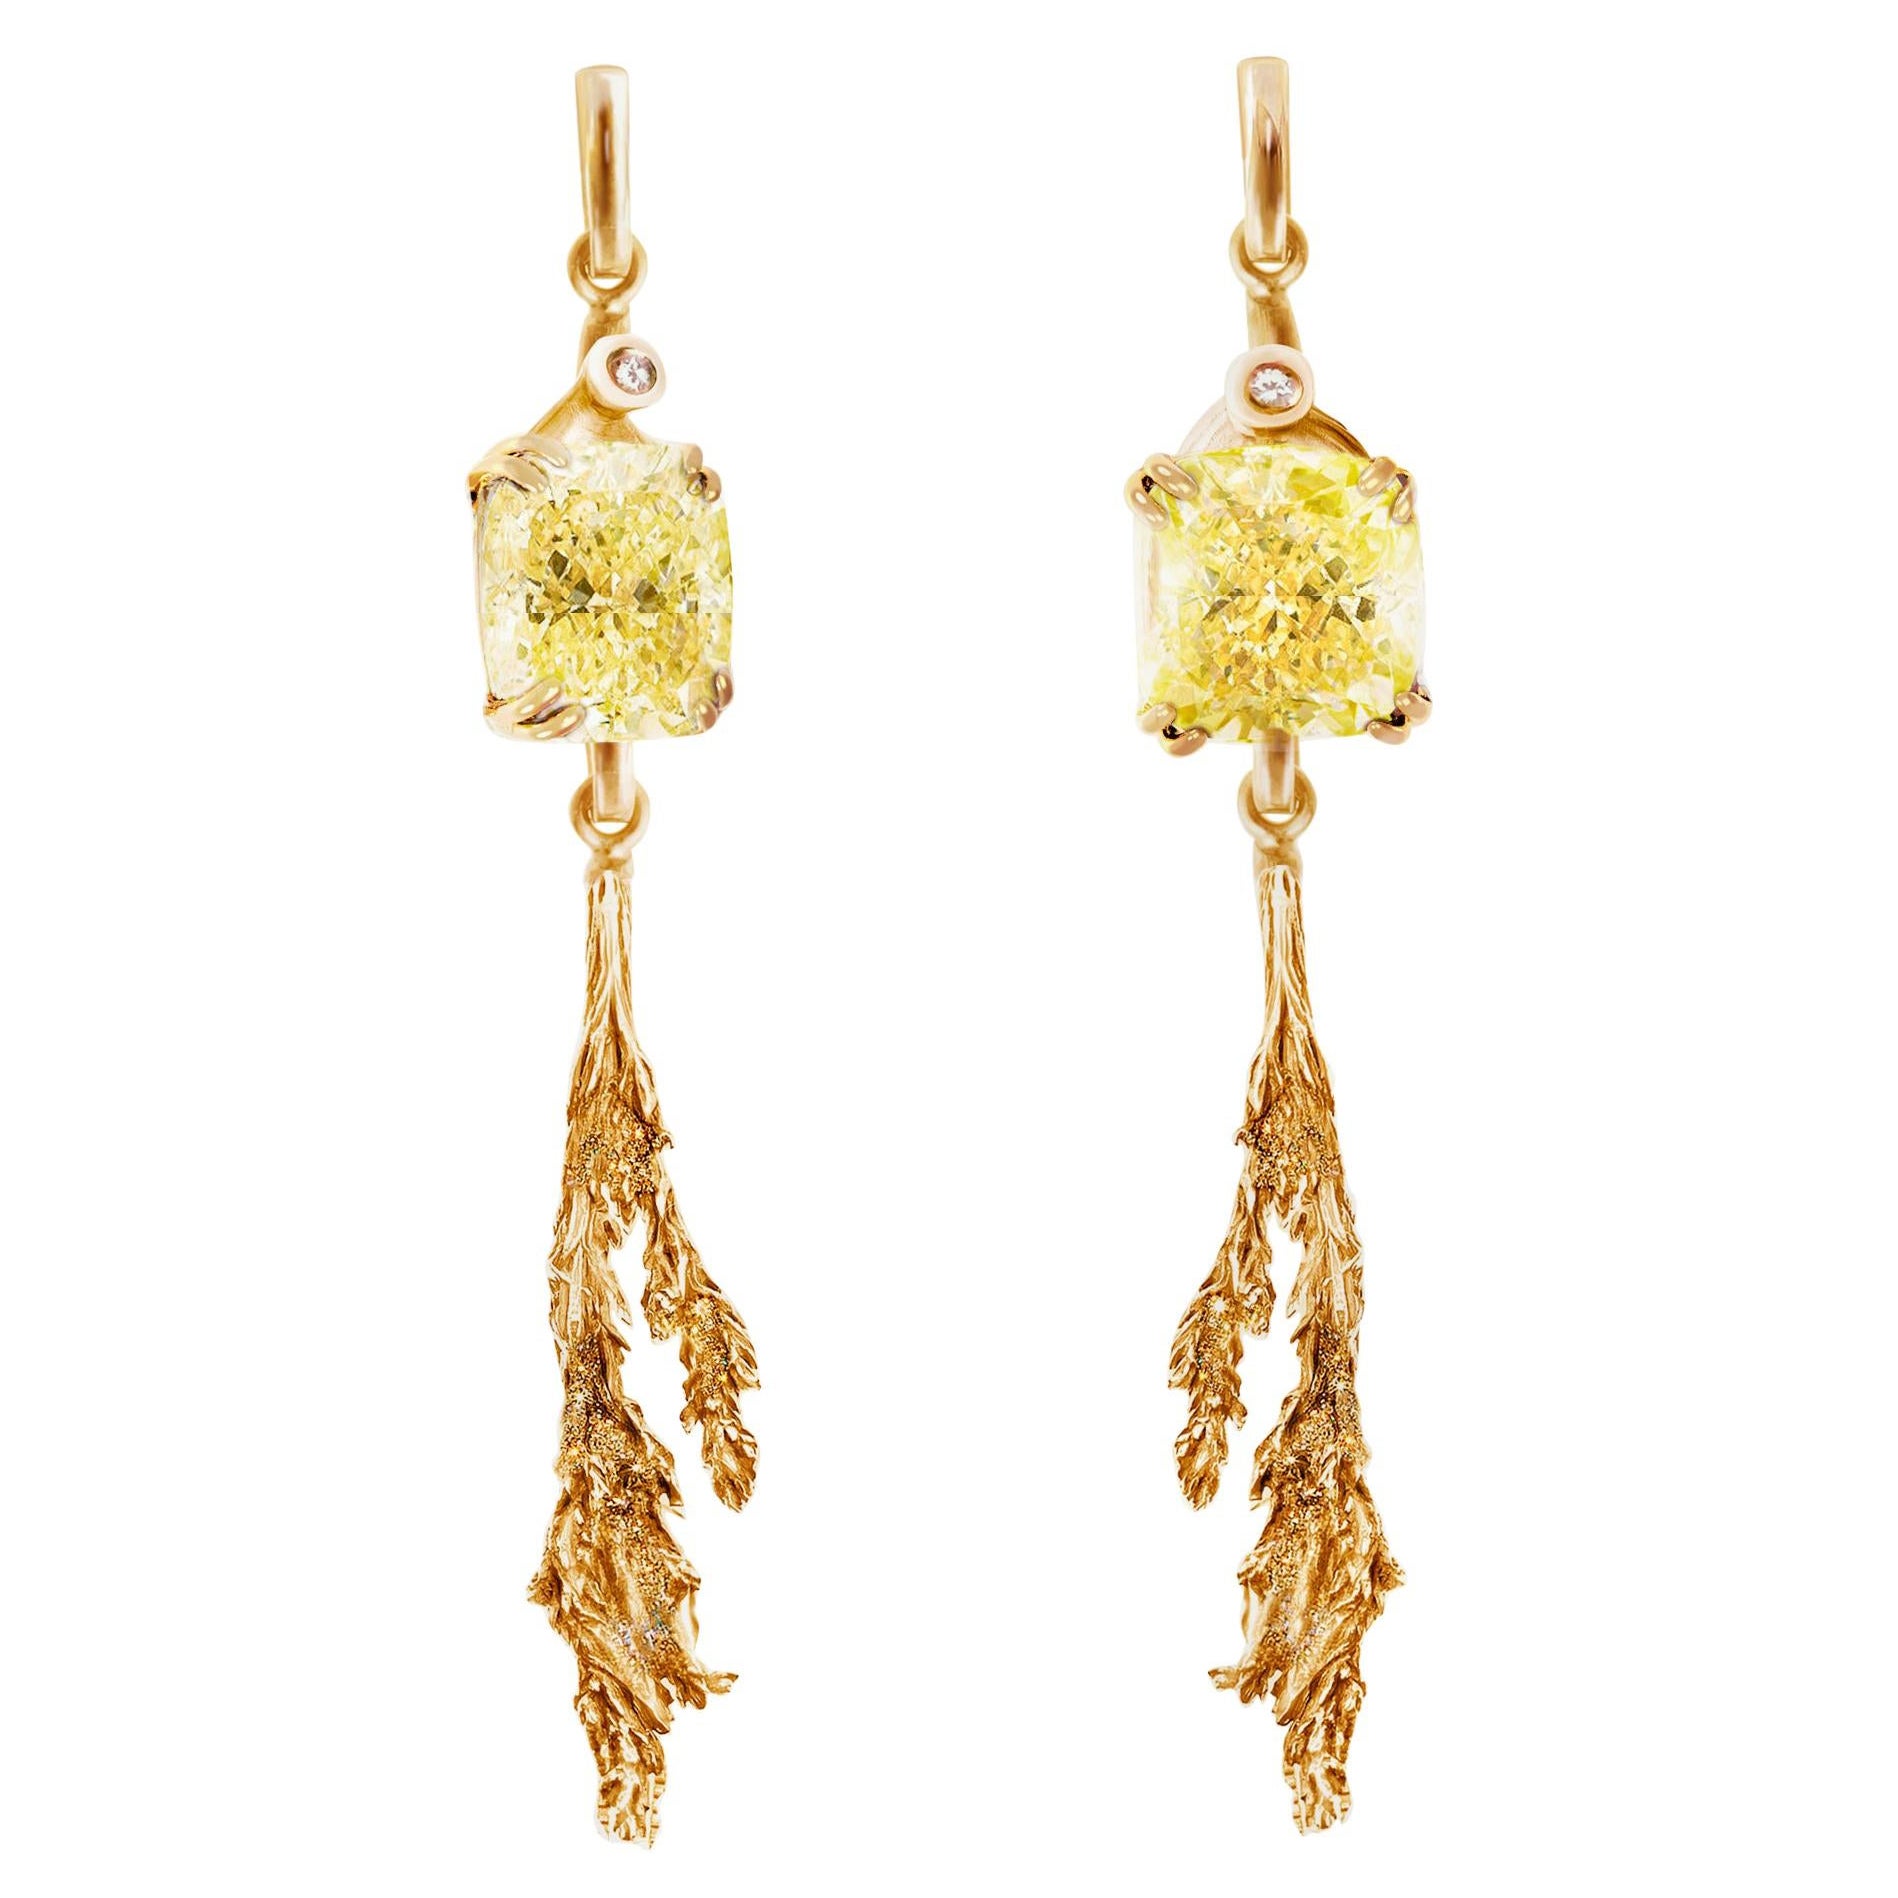 Eighteen Karat Gold Contemporary Earrings with Four Carats Yellow Diamonds